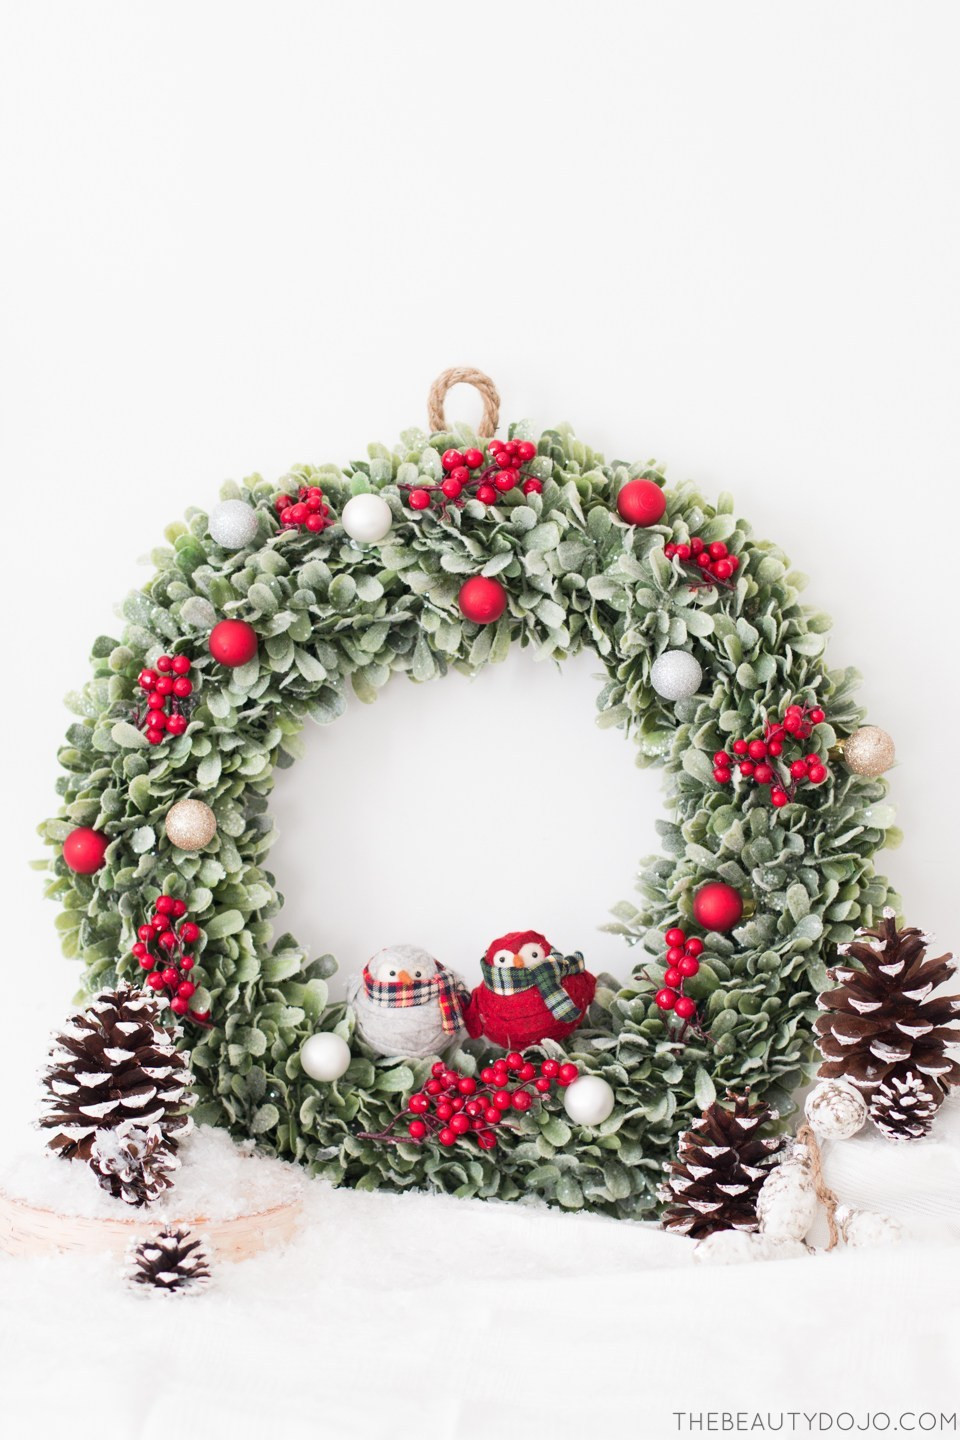 Best ideas about DIY Wreaths Christmas
. Save or Pin DIY Christmas Wreath The Beautydojo Now.